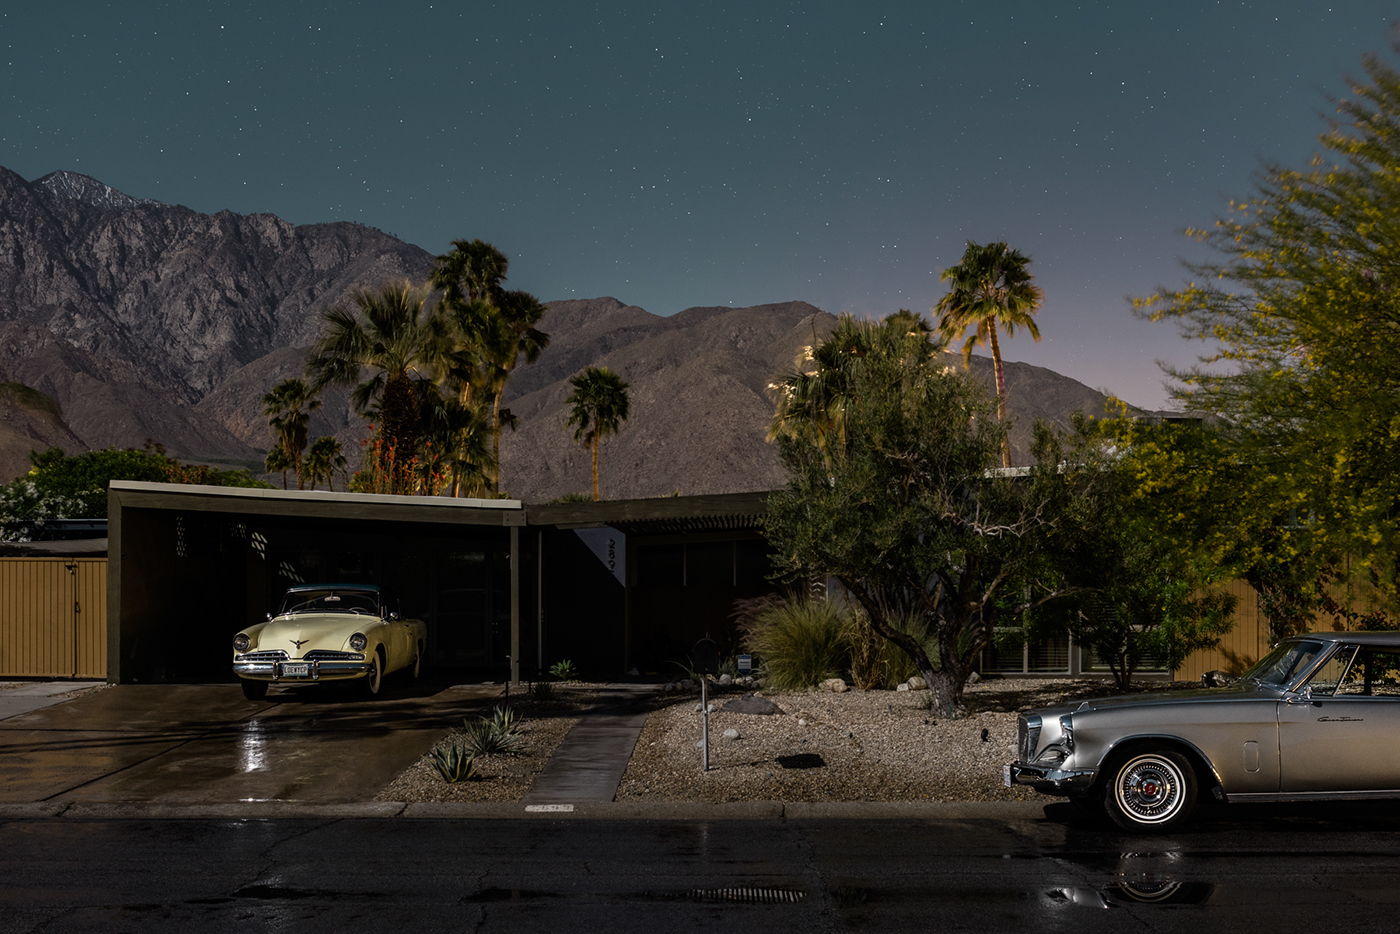 Tom blachford blachford midnight modern Palm Springs moonlight long exposure California modernism modernist MID-CENTURY